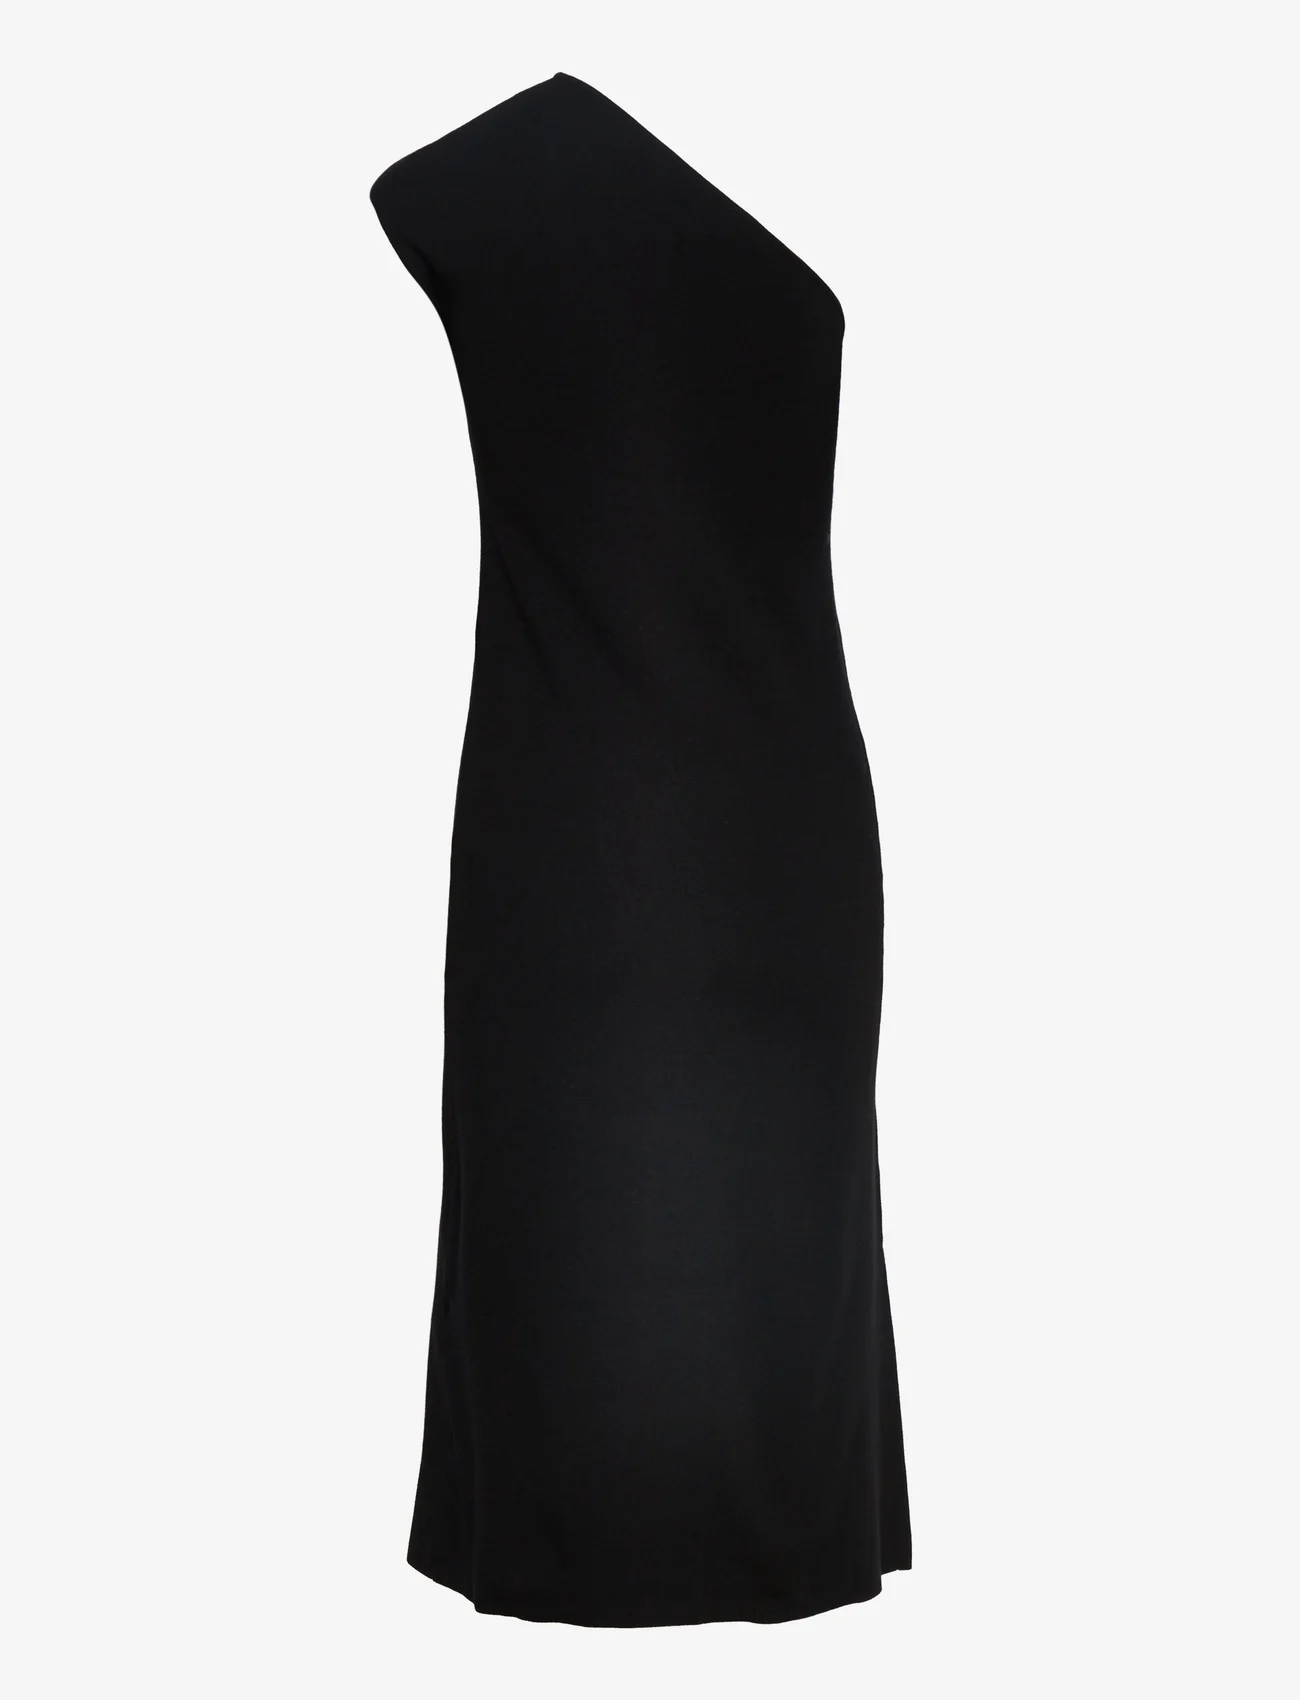 Filippa K - Katia Dress - sukienki do kolan i midi - black - 1